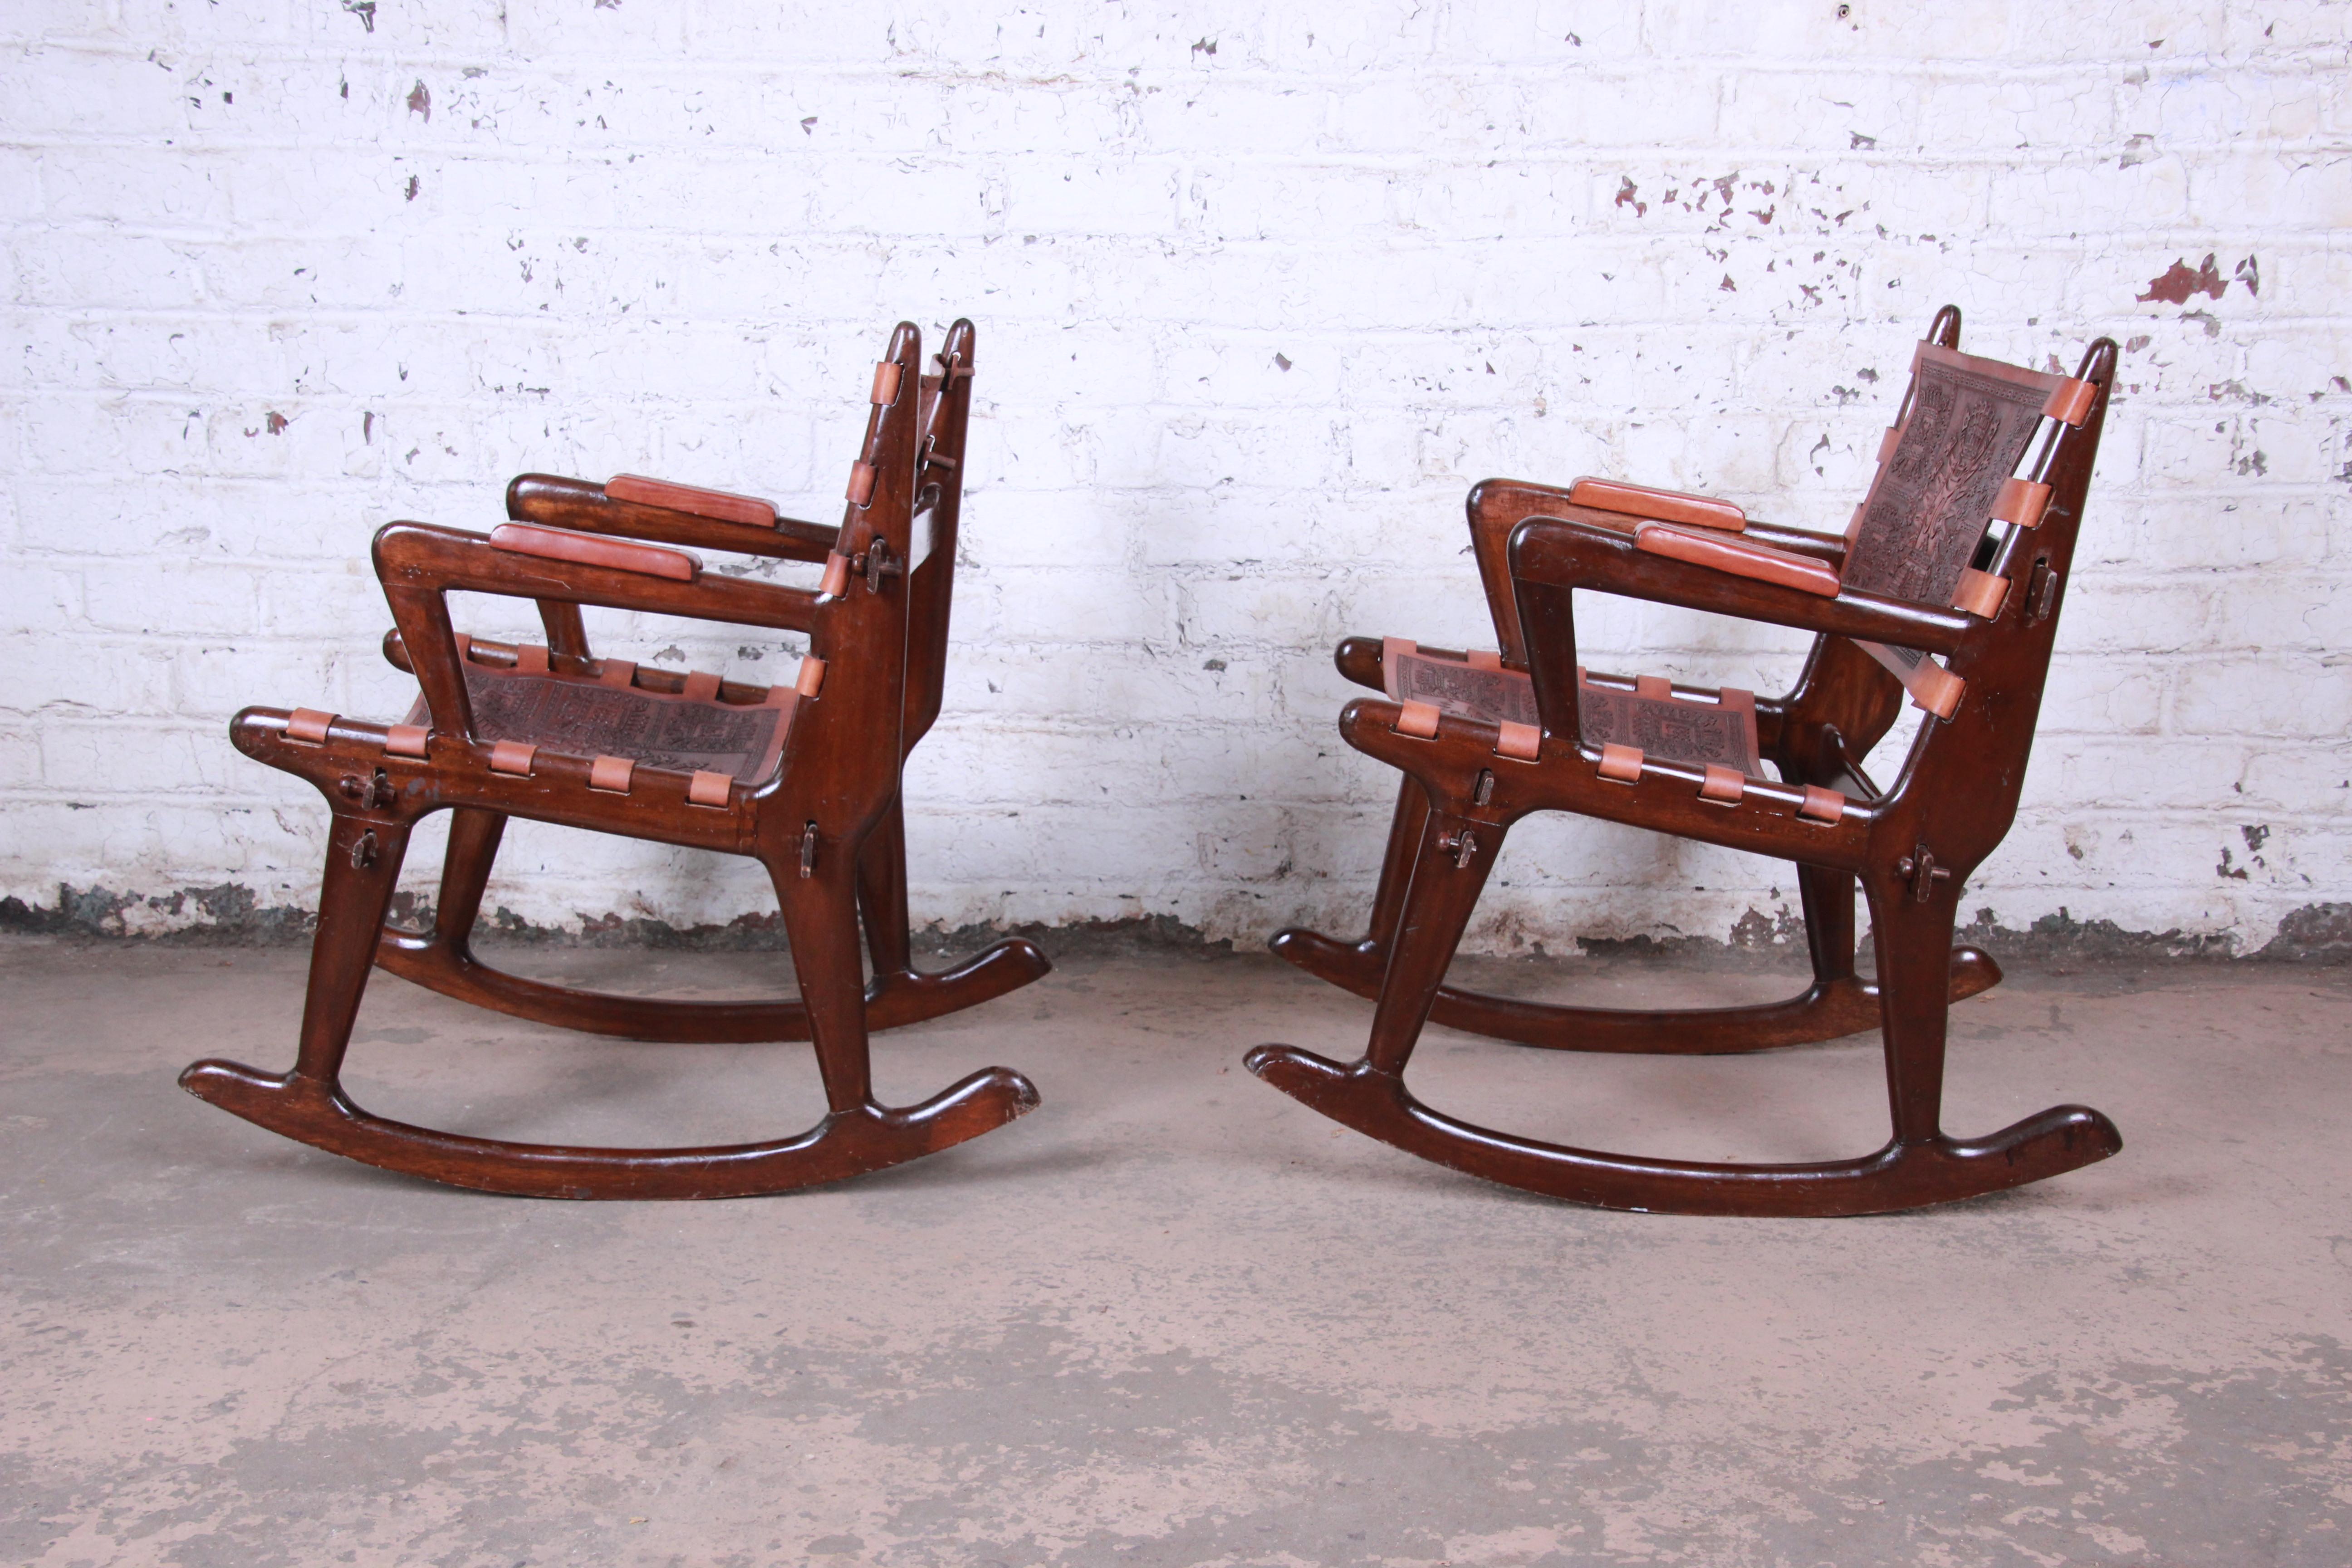 Ecuadorean Angel Pazmino Ecuadorian Wood and Leather Rocking Chairs, Pair